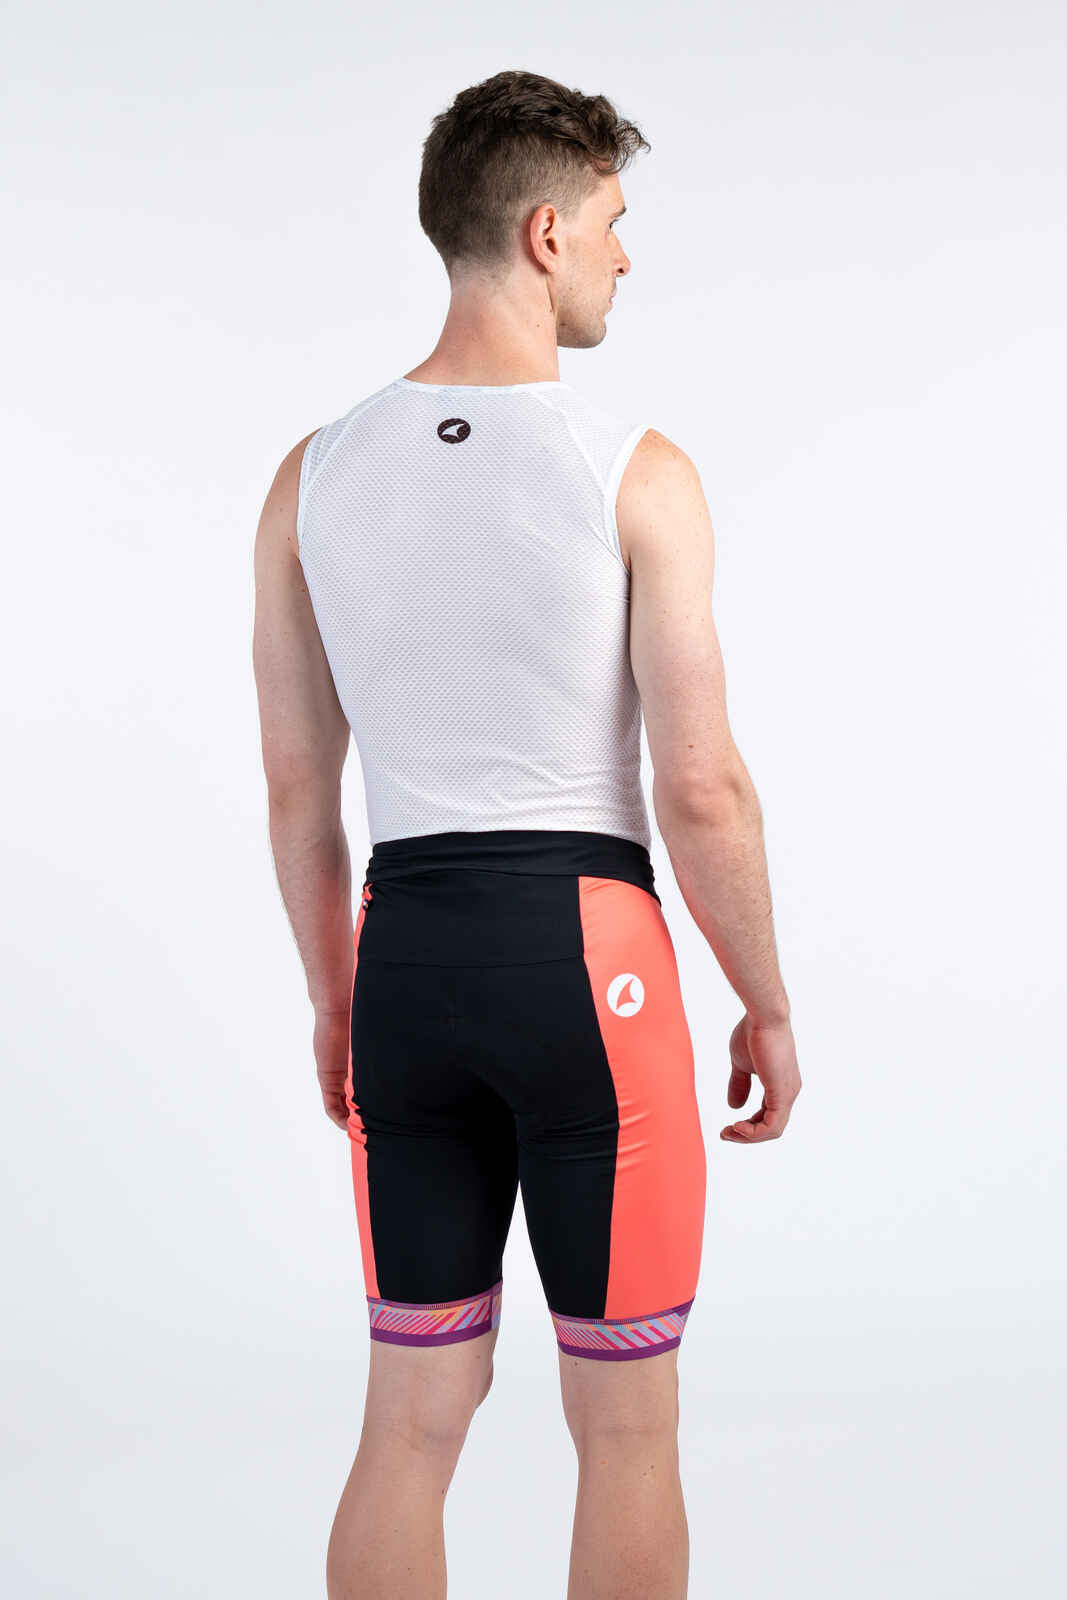 Men's Custom Cycling Shorts - Continental Back View